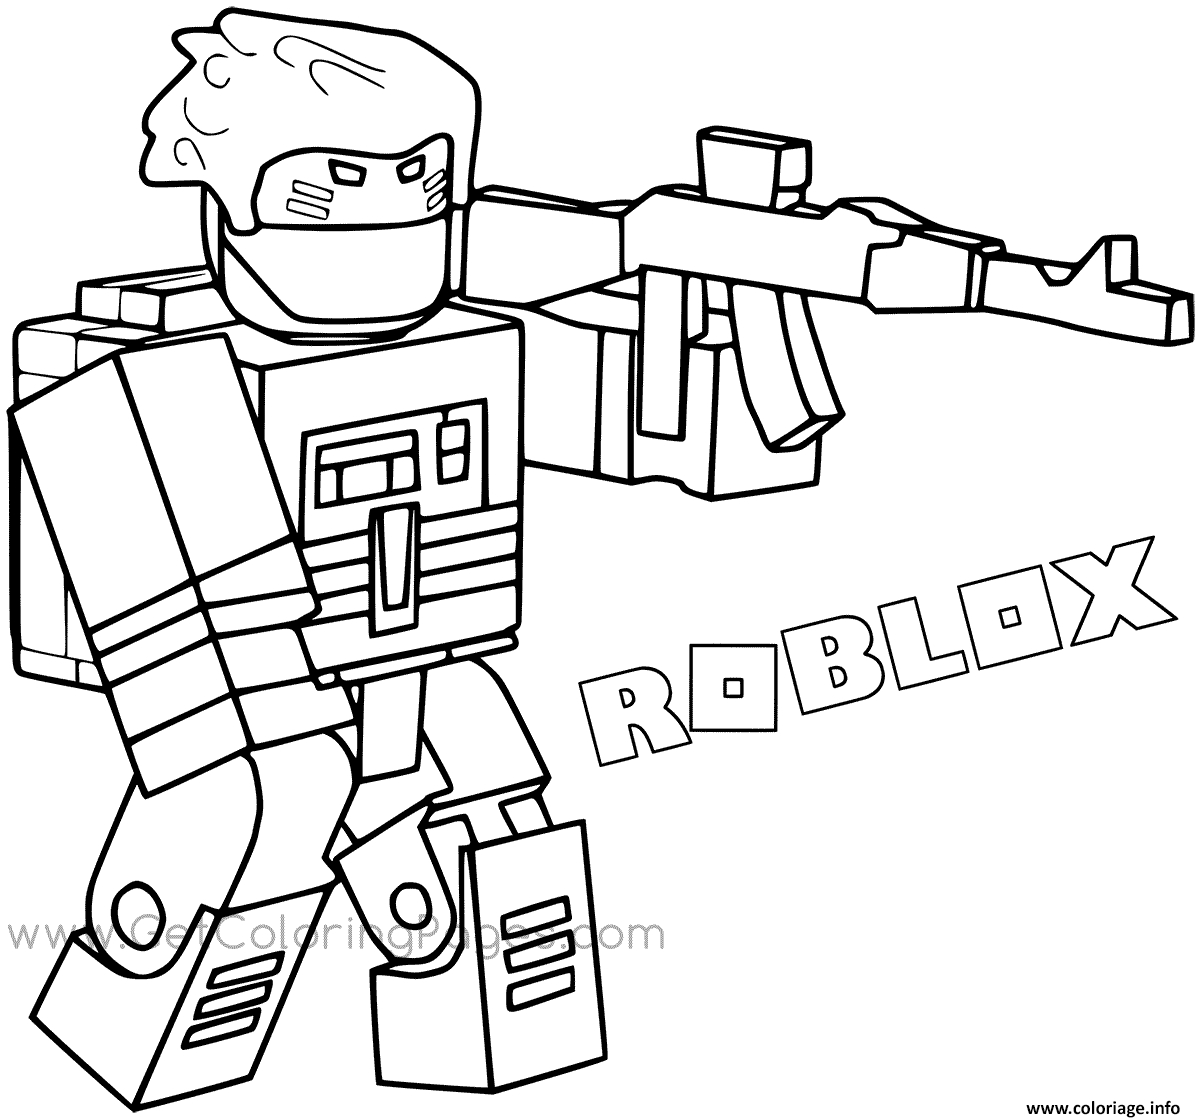 Coloriage Roblox Bandit With Weapon And Backpac - Jecolorie destiné Coloriage De Roblox